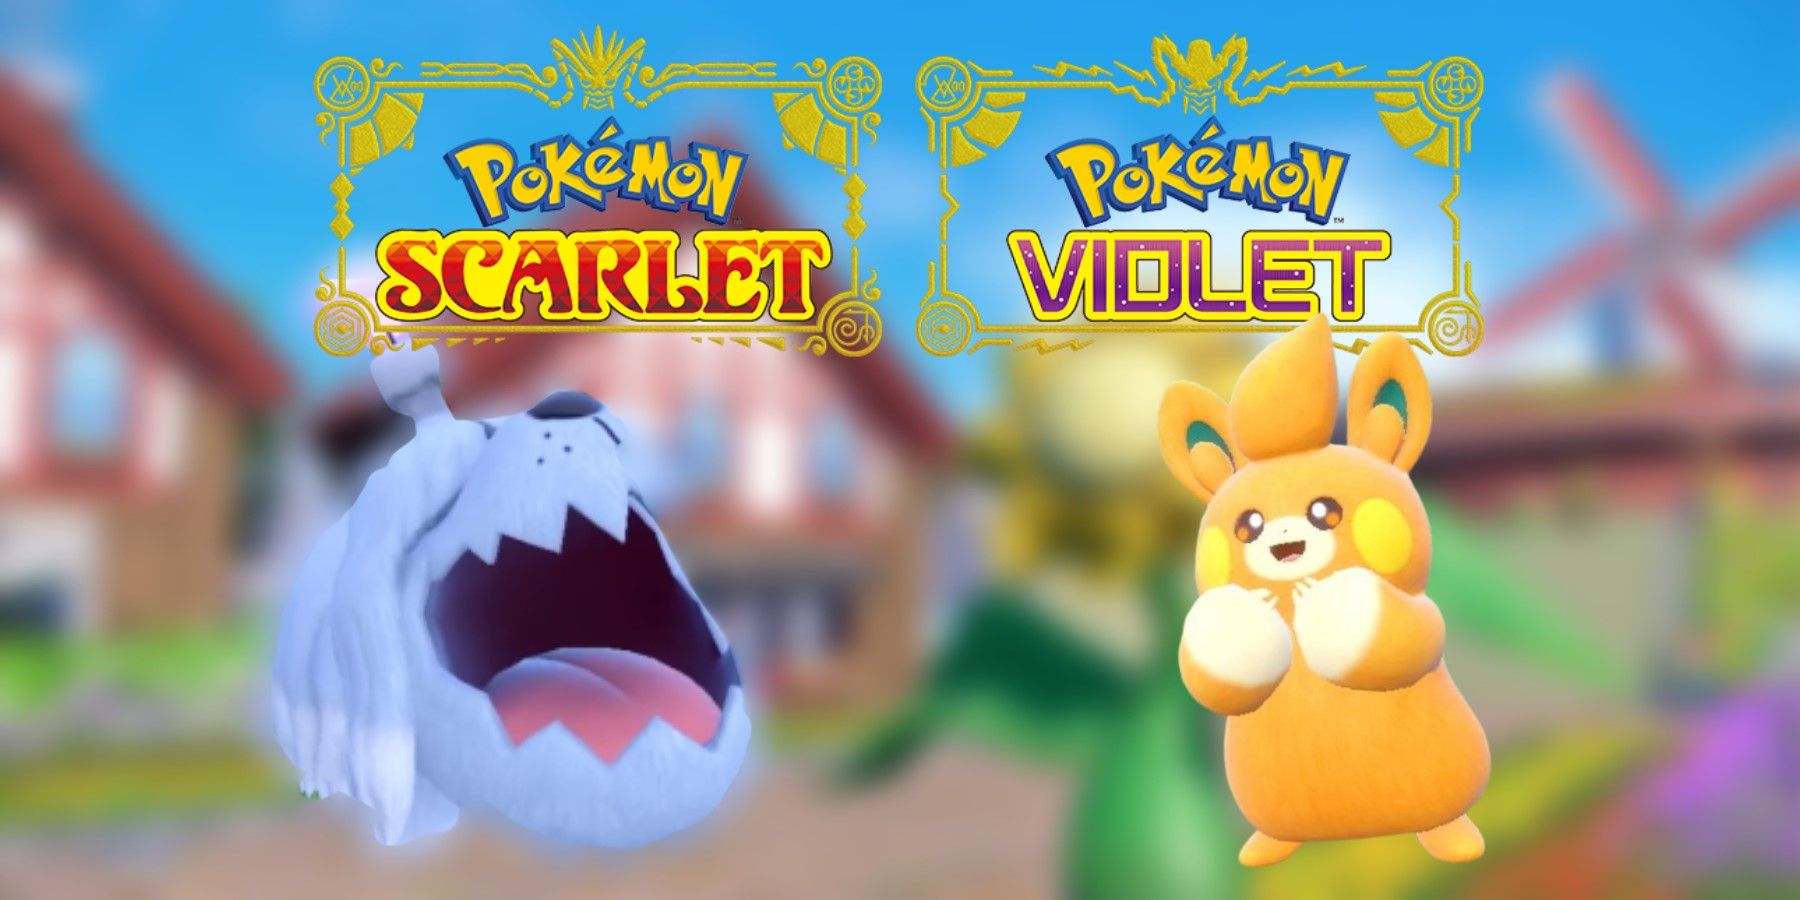 Pokemon Scarlet and Violet leaks show off new Pokemon